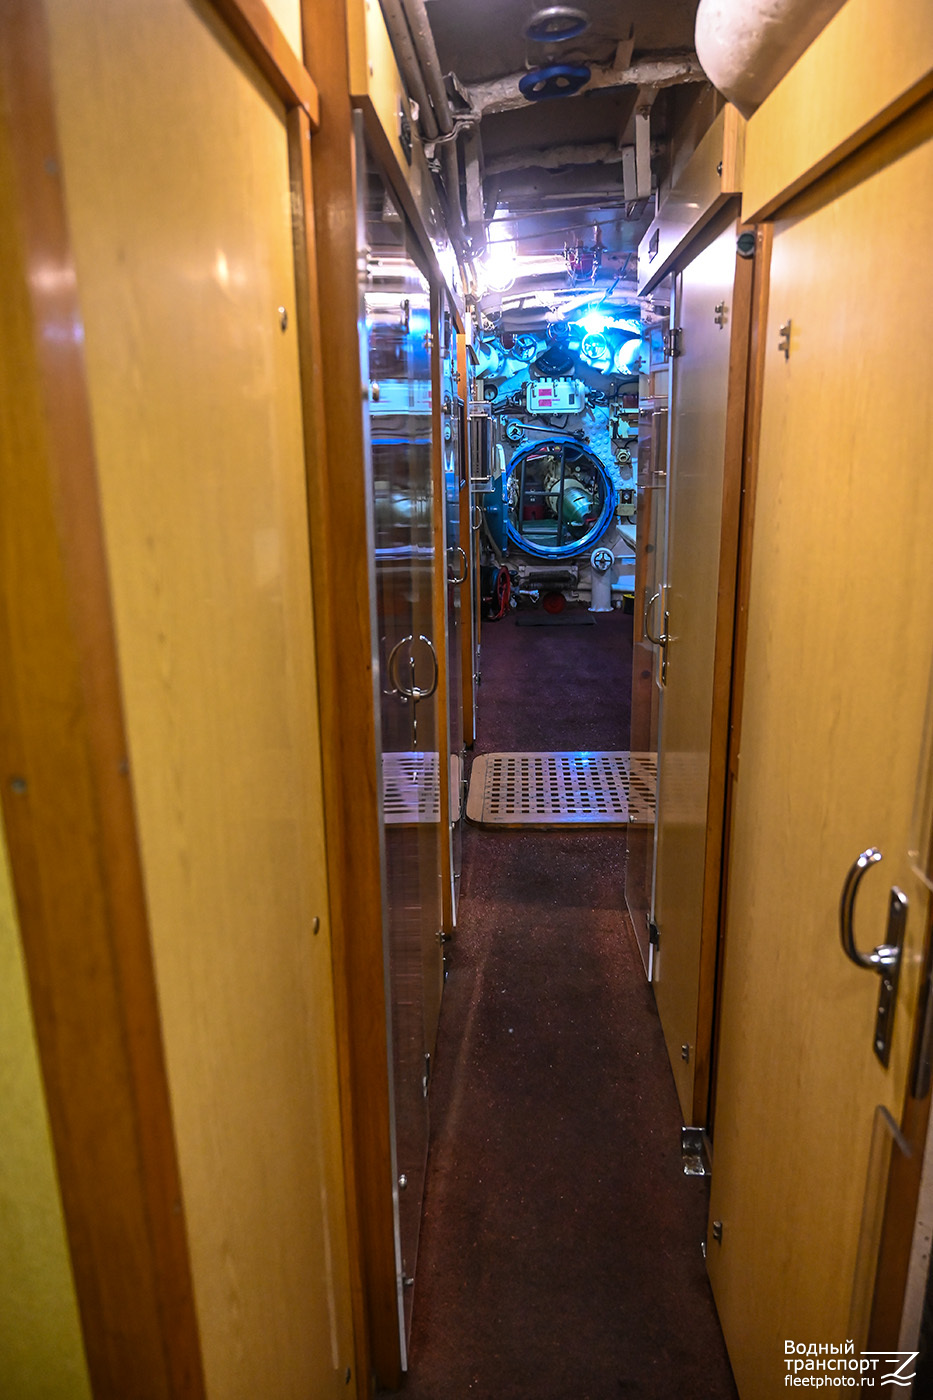 С-189. Internal compartments